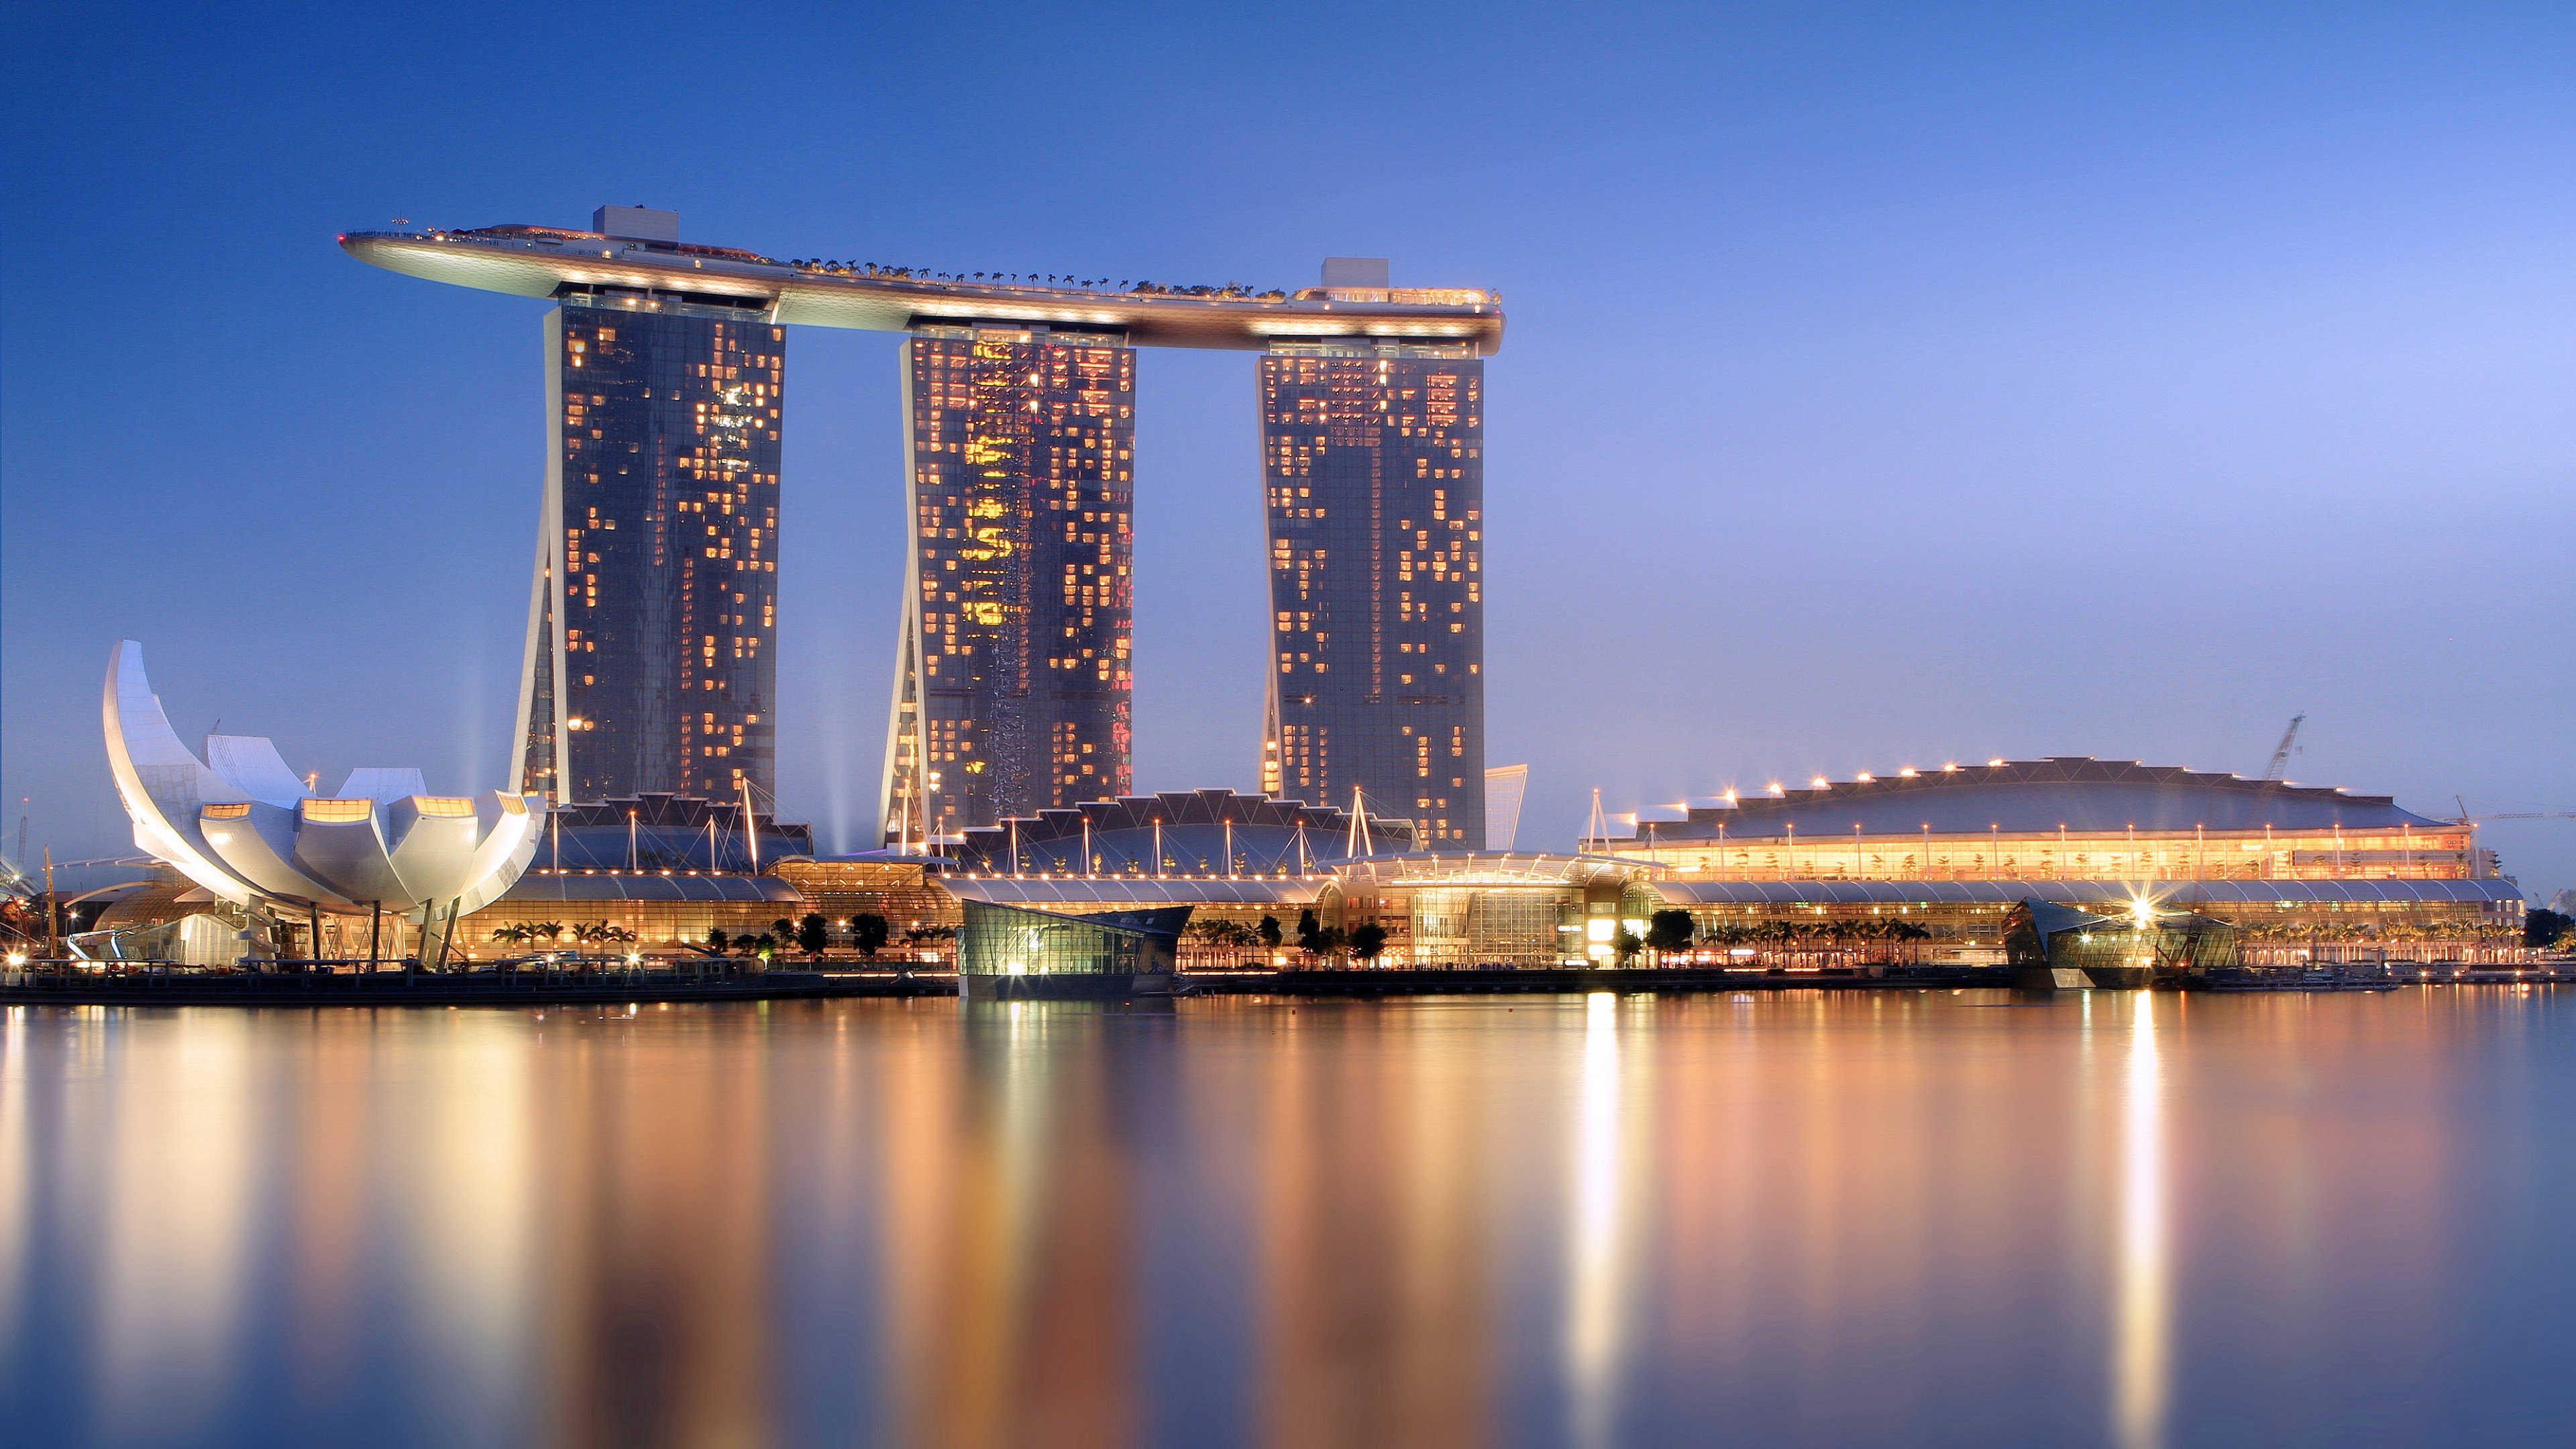 Fondos de pantalla Marina Bay Sands in Singapore